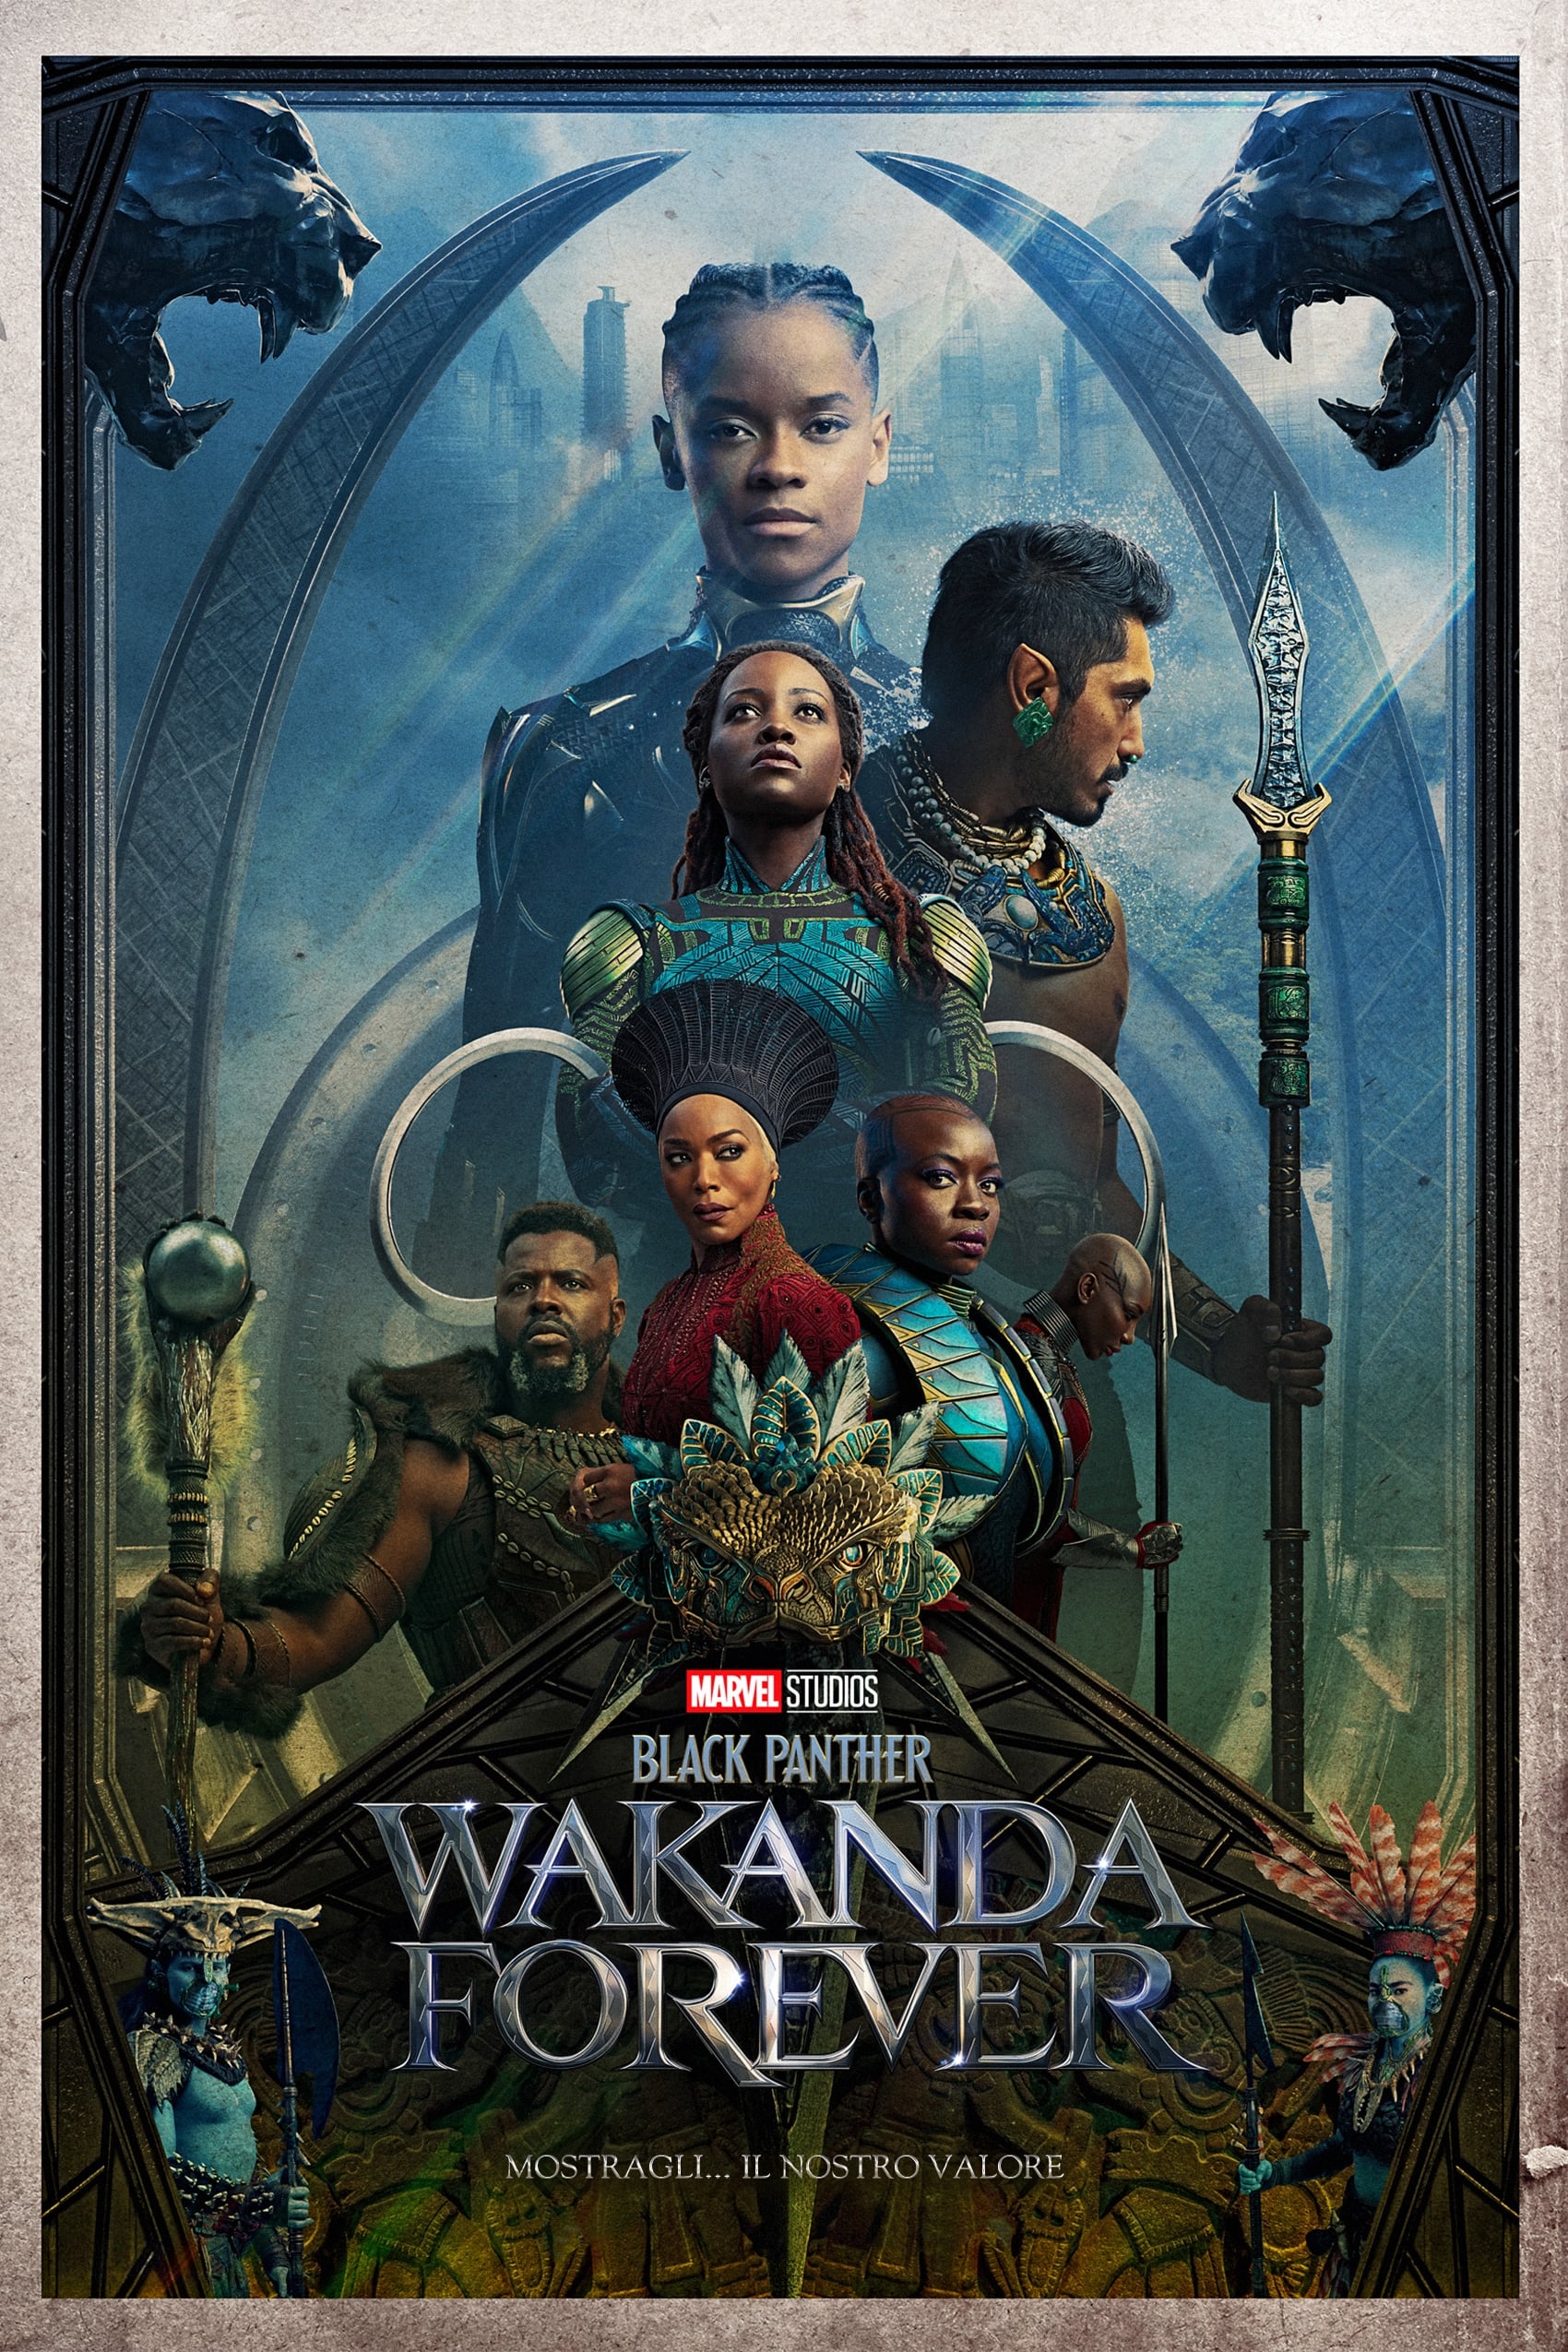 Black Panther - Wakanda Forever film